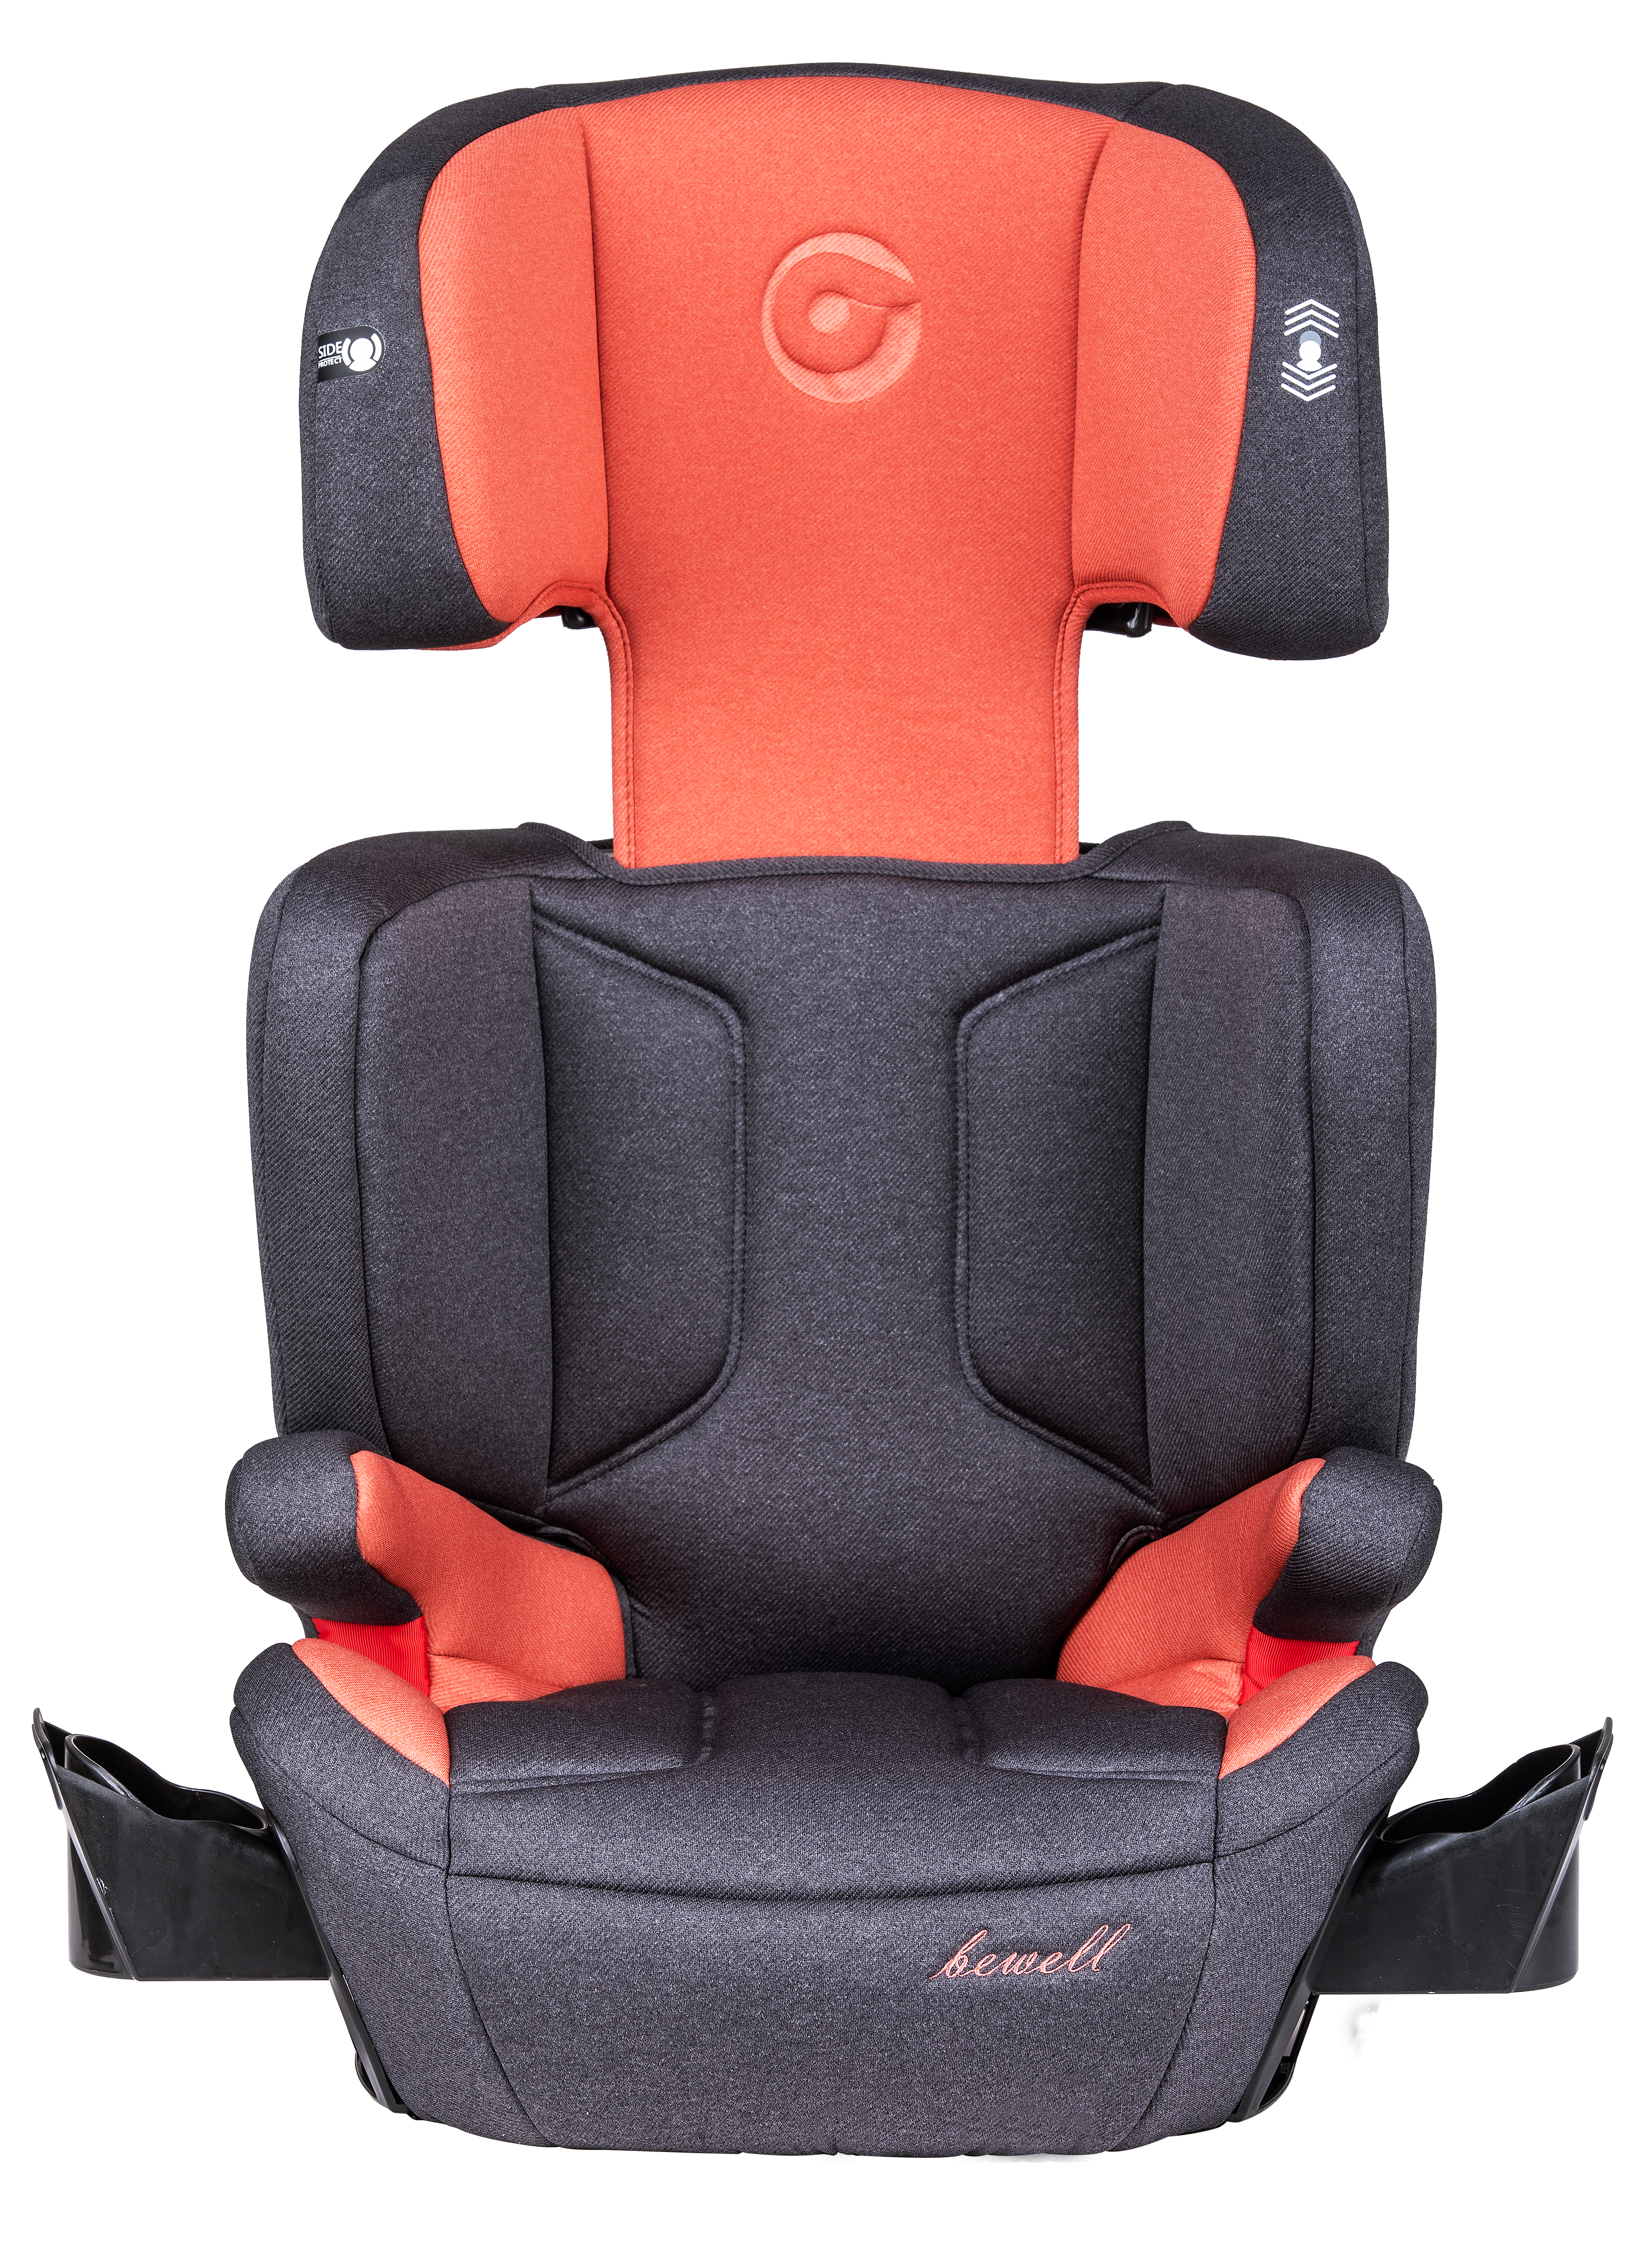 Vehicle Belt Orange 4 Years Old Baby Car Seat